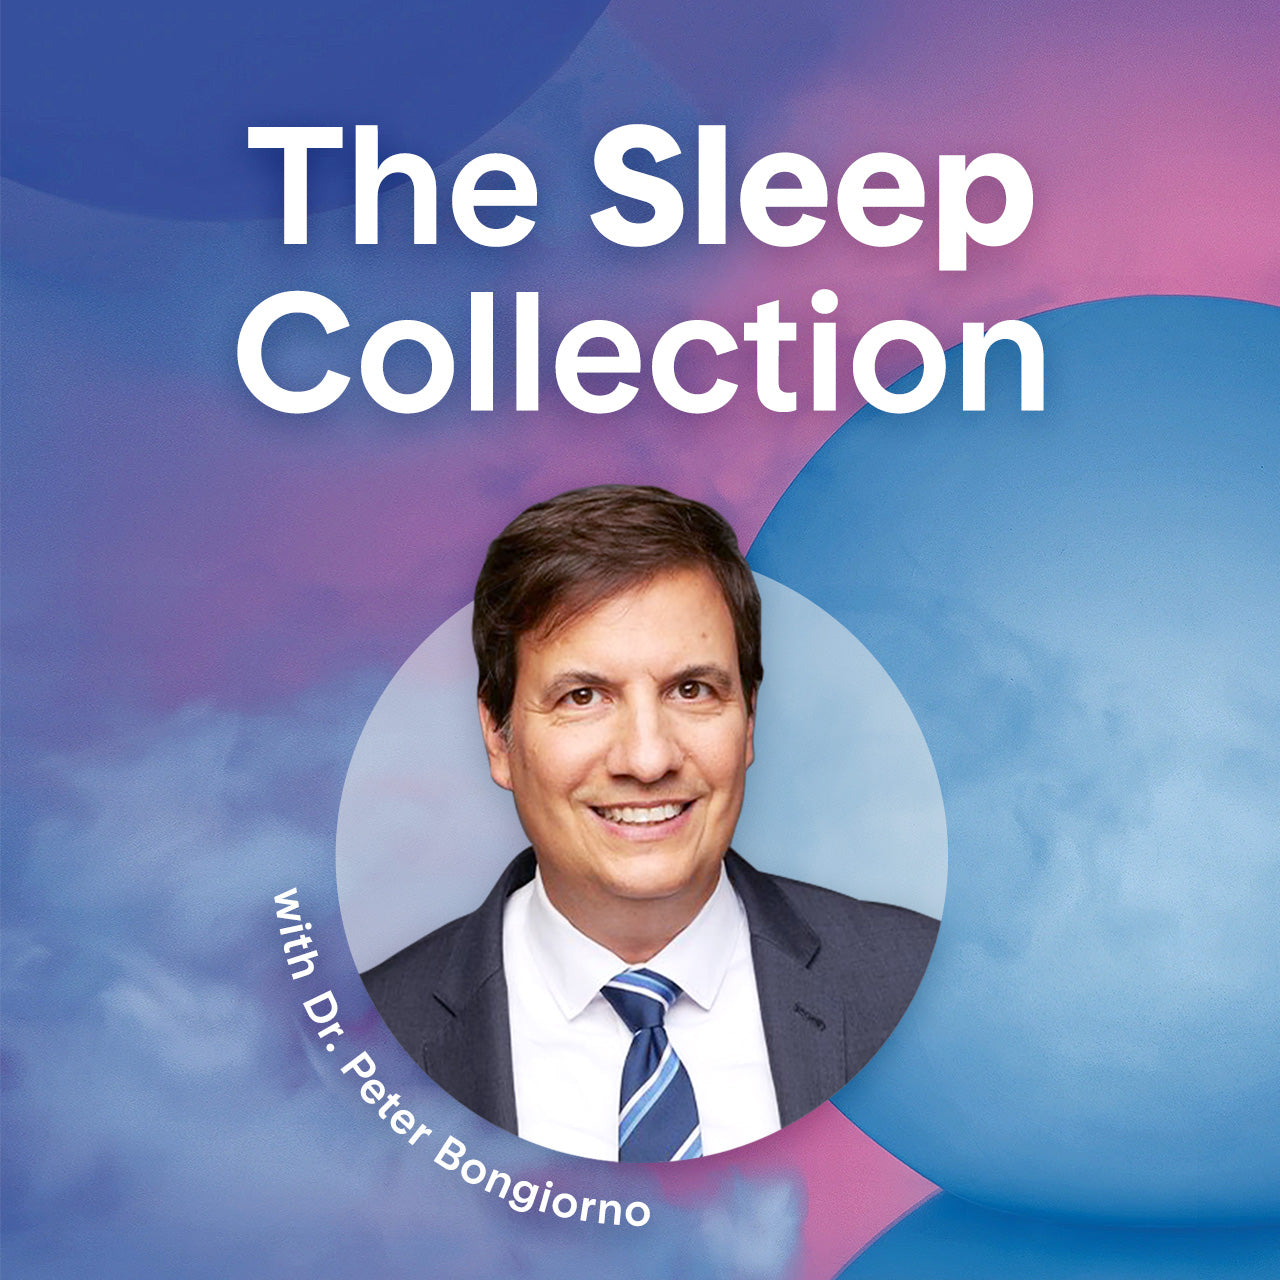 The Sleep Collection